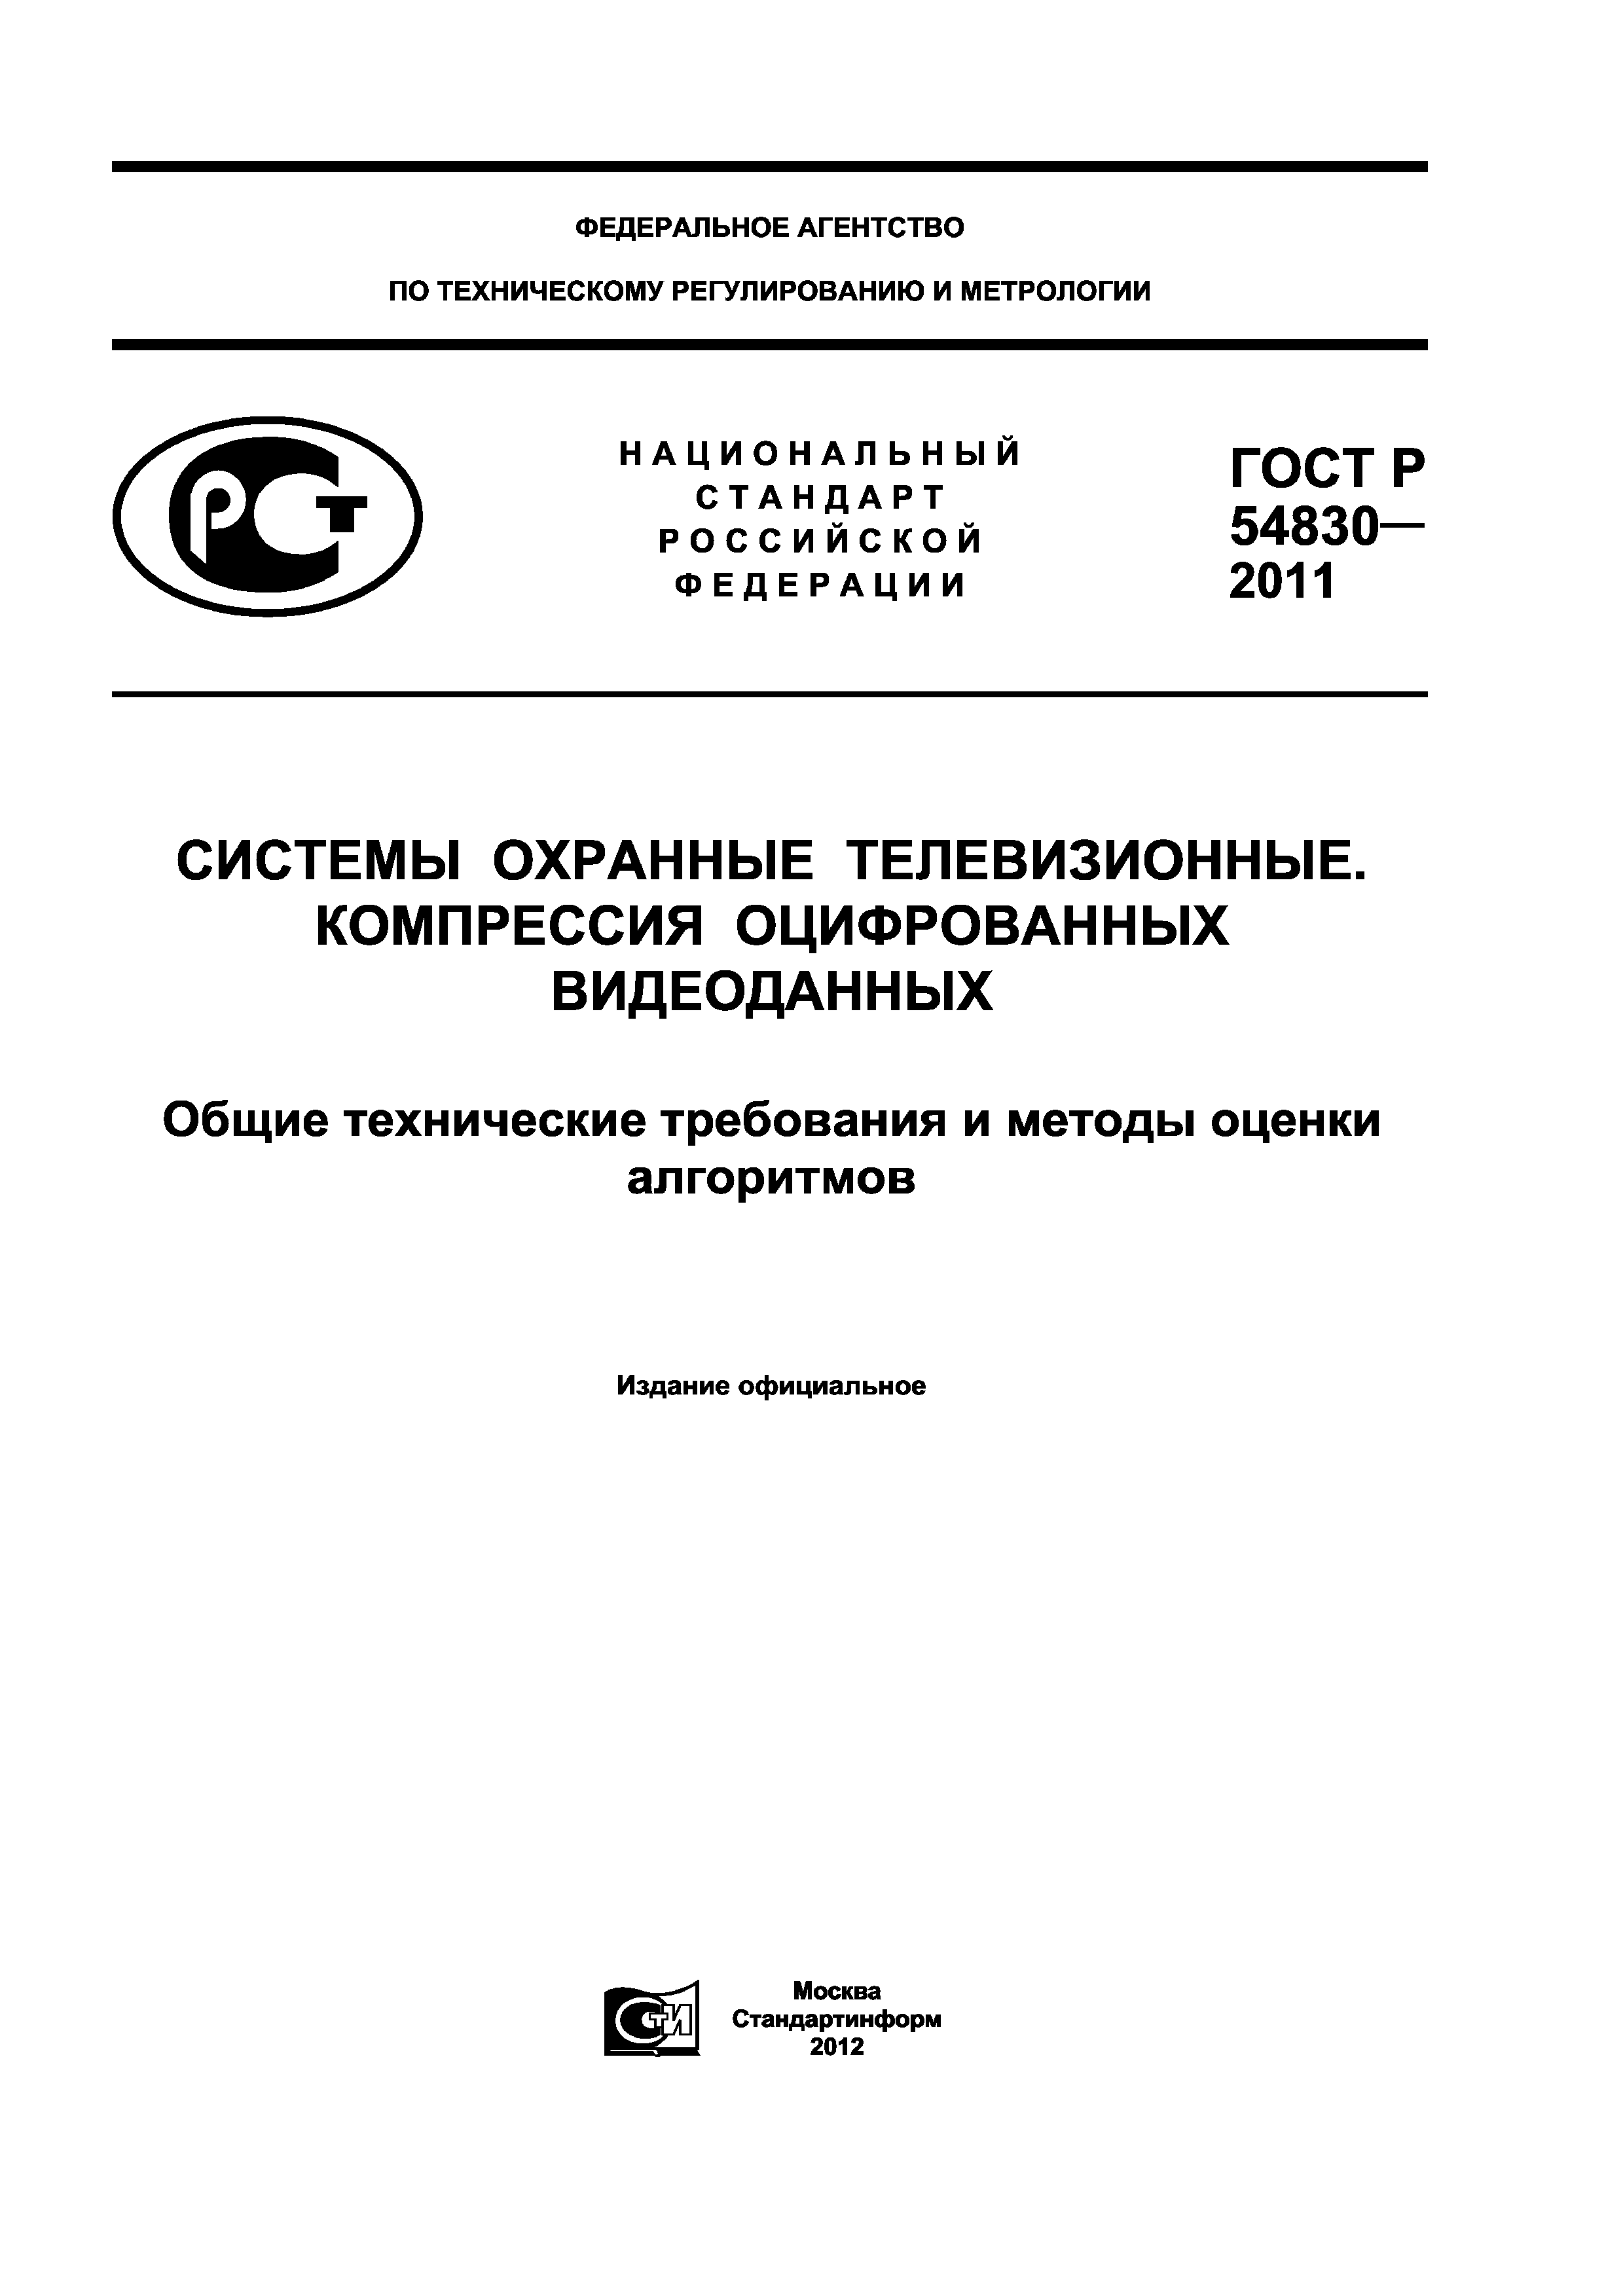 ГОСТ Р 54830-2011